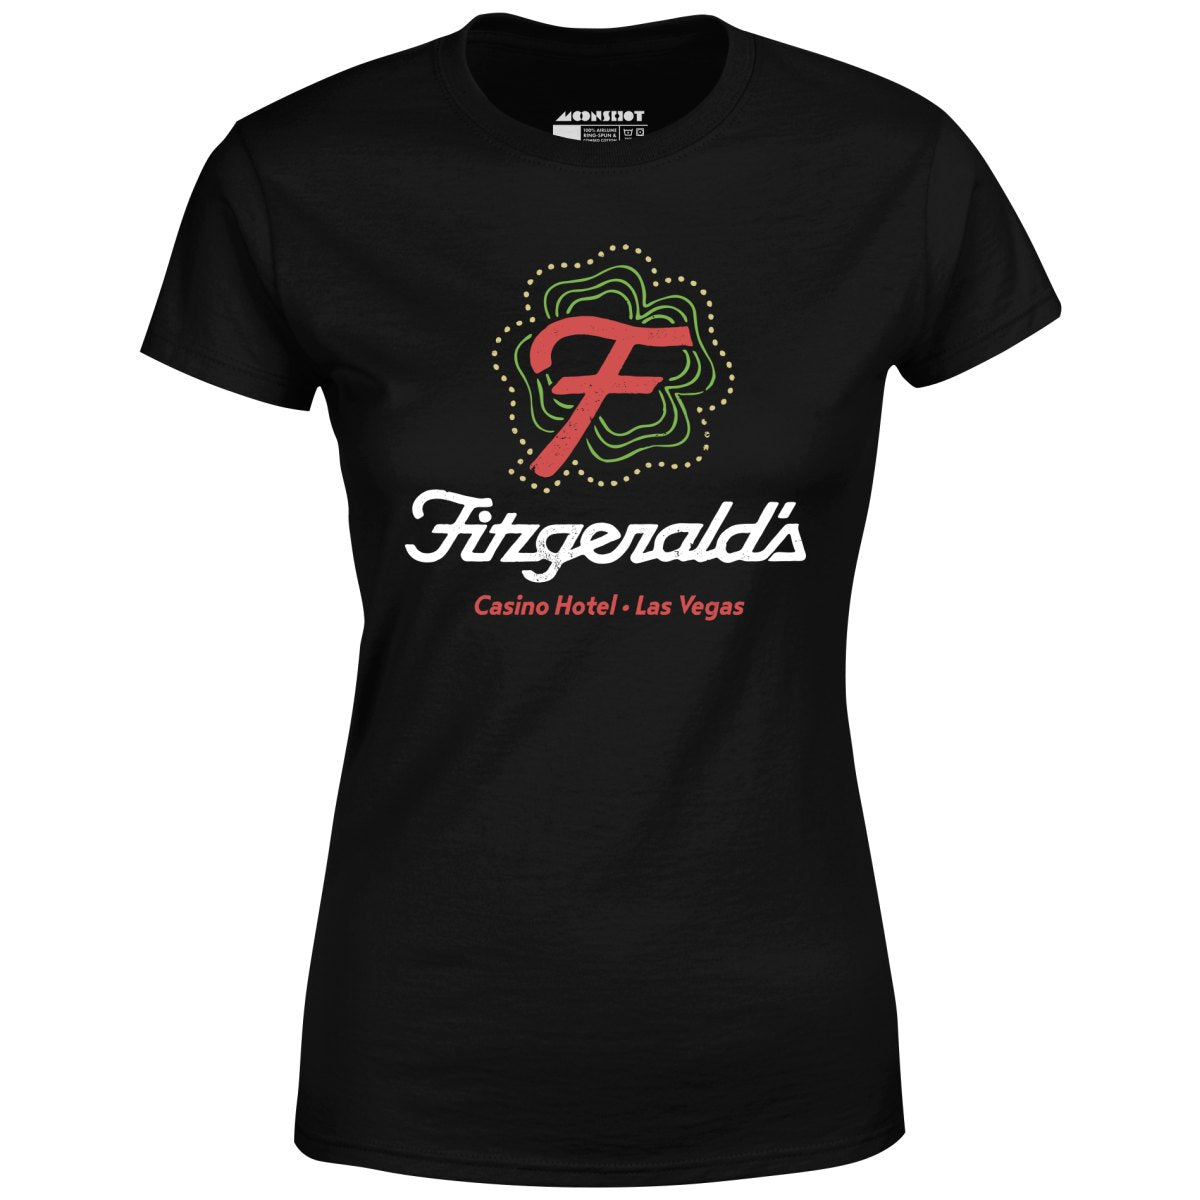 Fitzgerald's Hotel and Casino - Vintage Las Vegas - Women's T-Shirt